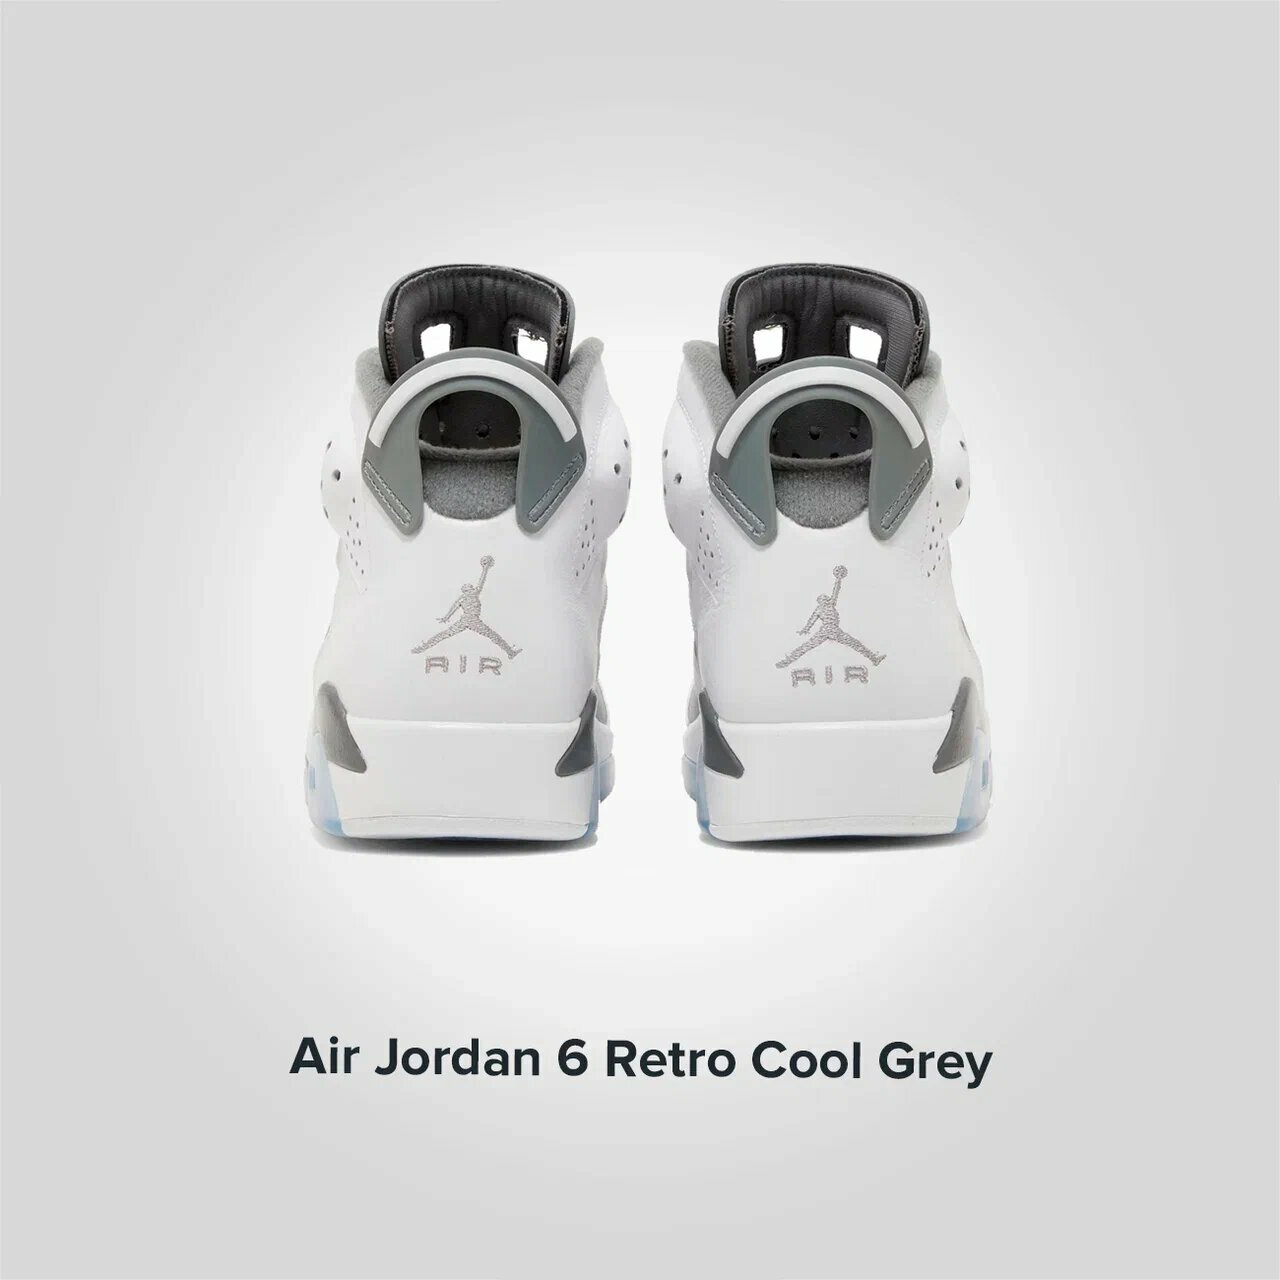 Air Jordan 6 Retro Cool Grey